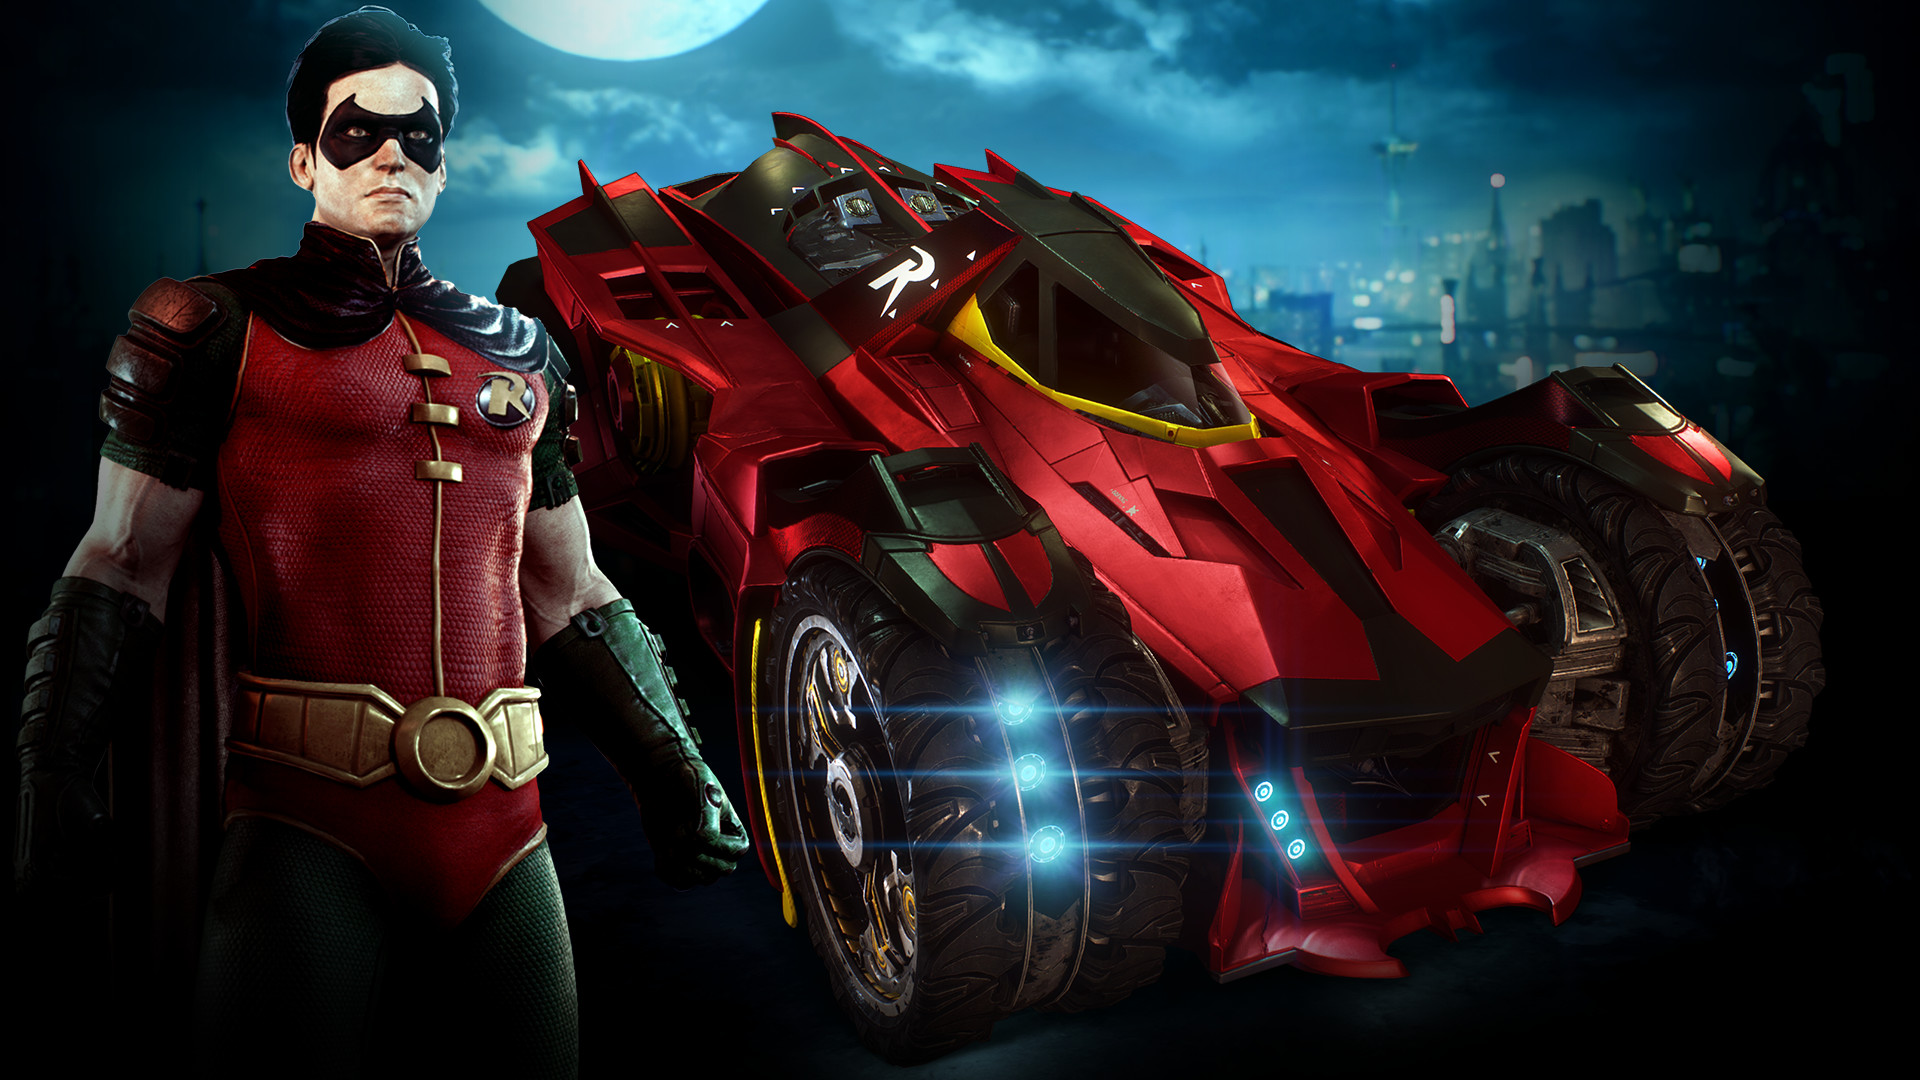 Batman™: Arkham Knight - Robin and Batmobile Skins Pack trên Steam